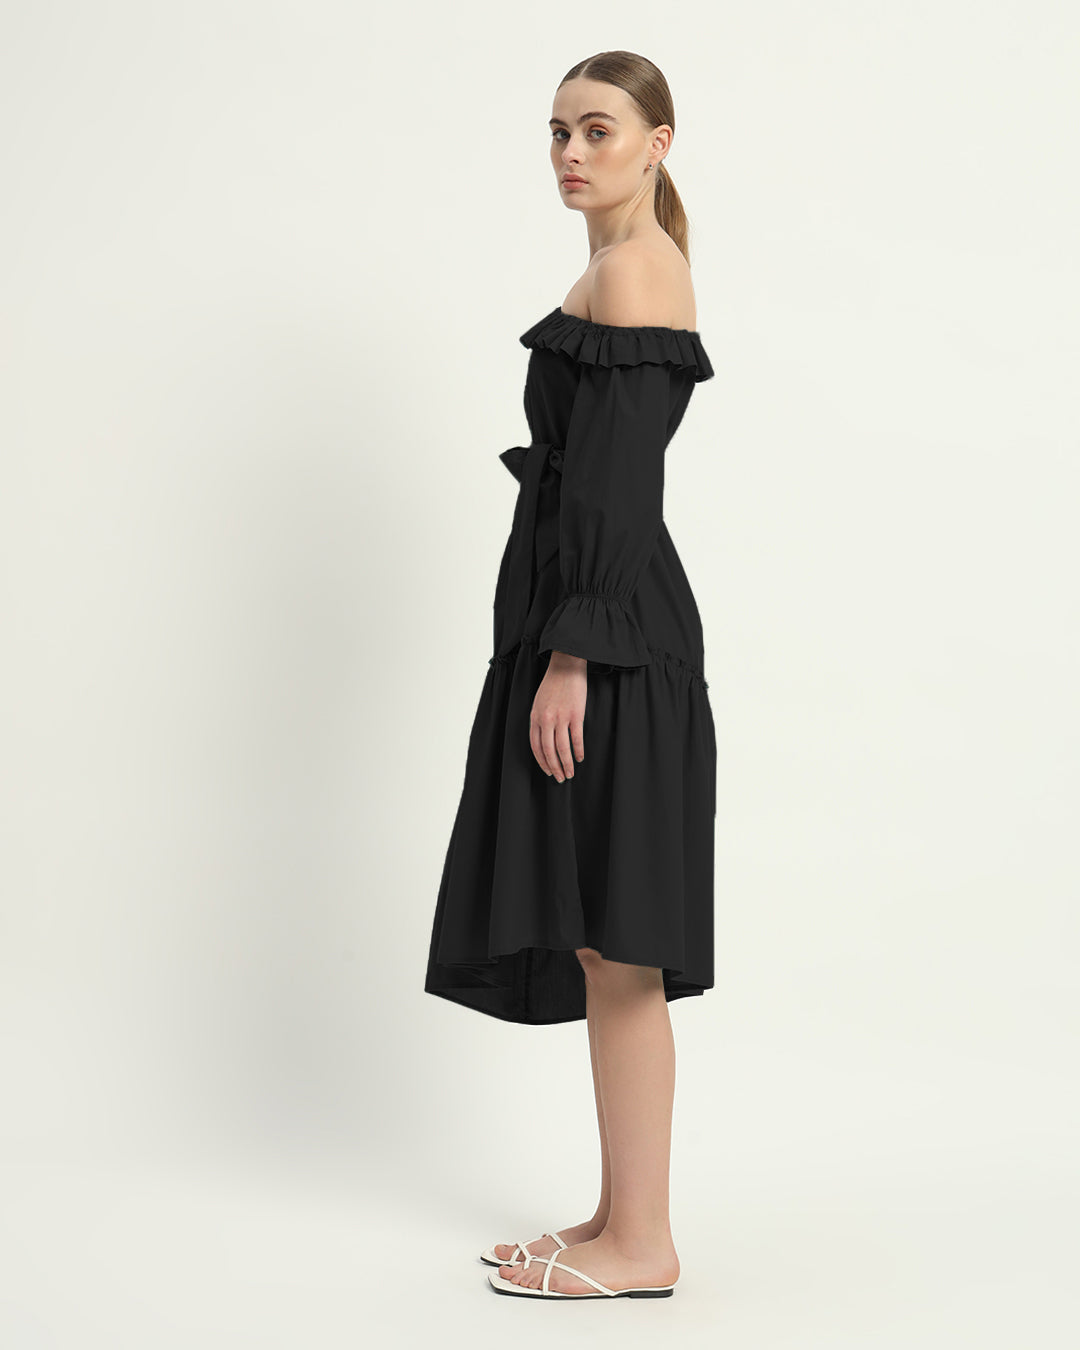 The Noir Stellata Cotton Dress